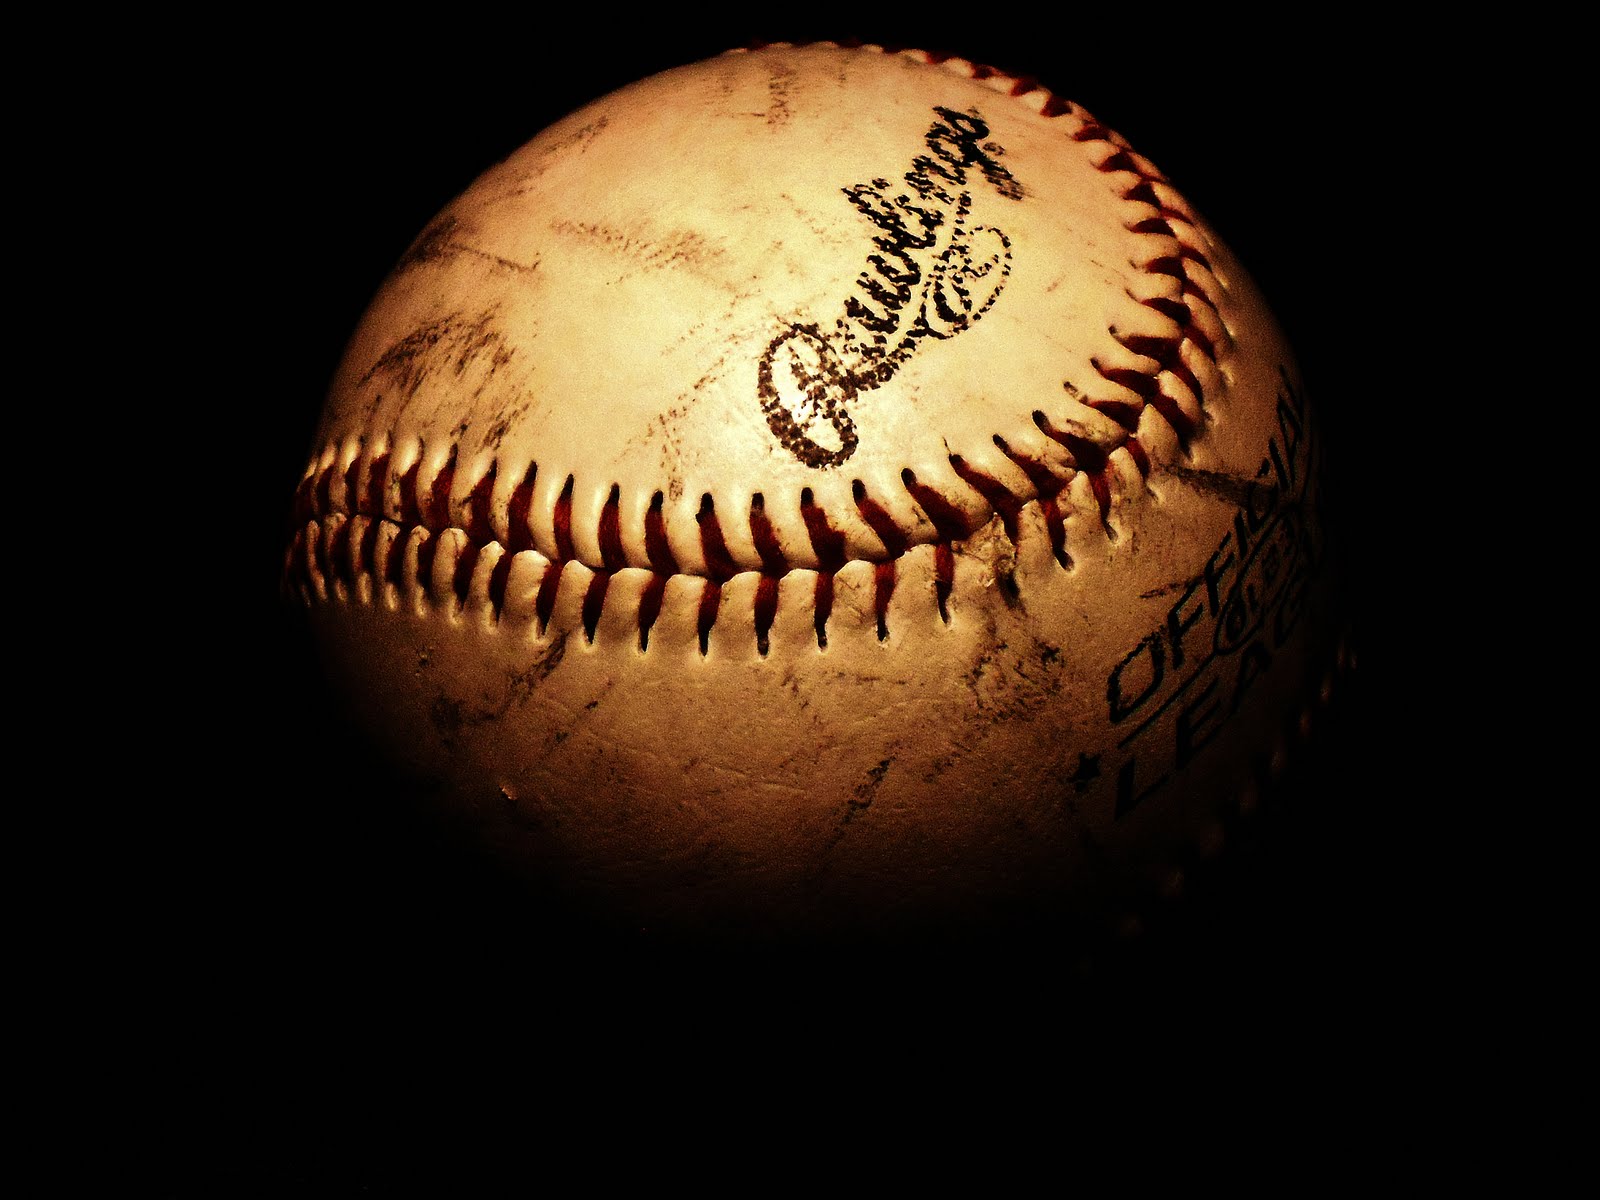 Baseball 745338 1600x1200px by Josh McGrotty 1600x1200